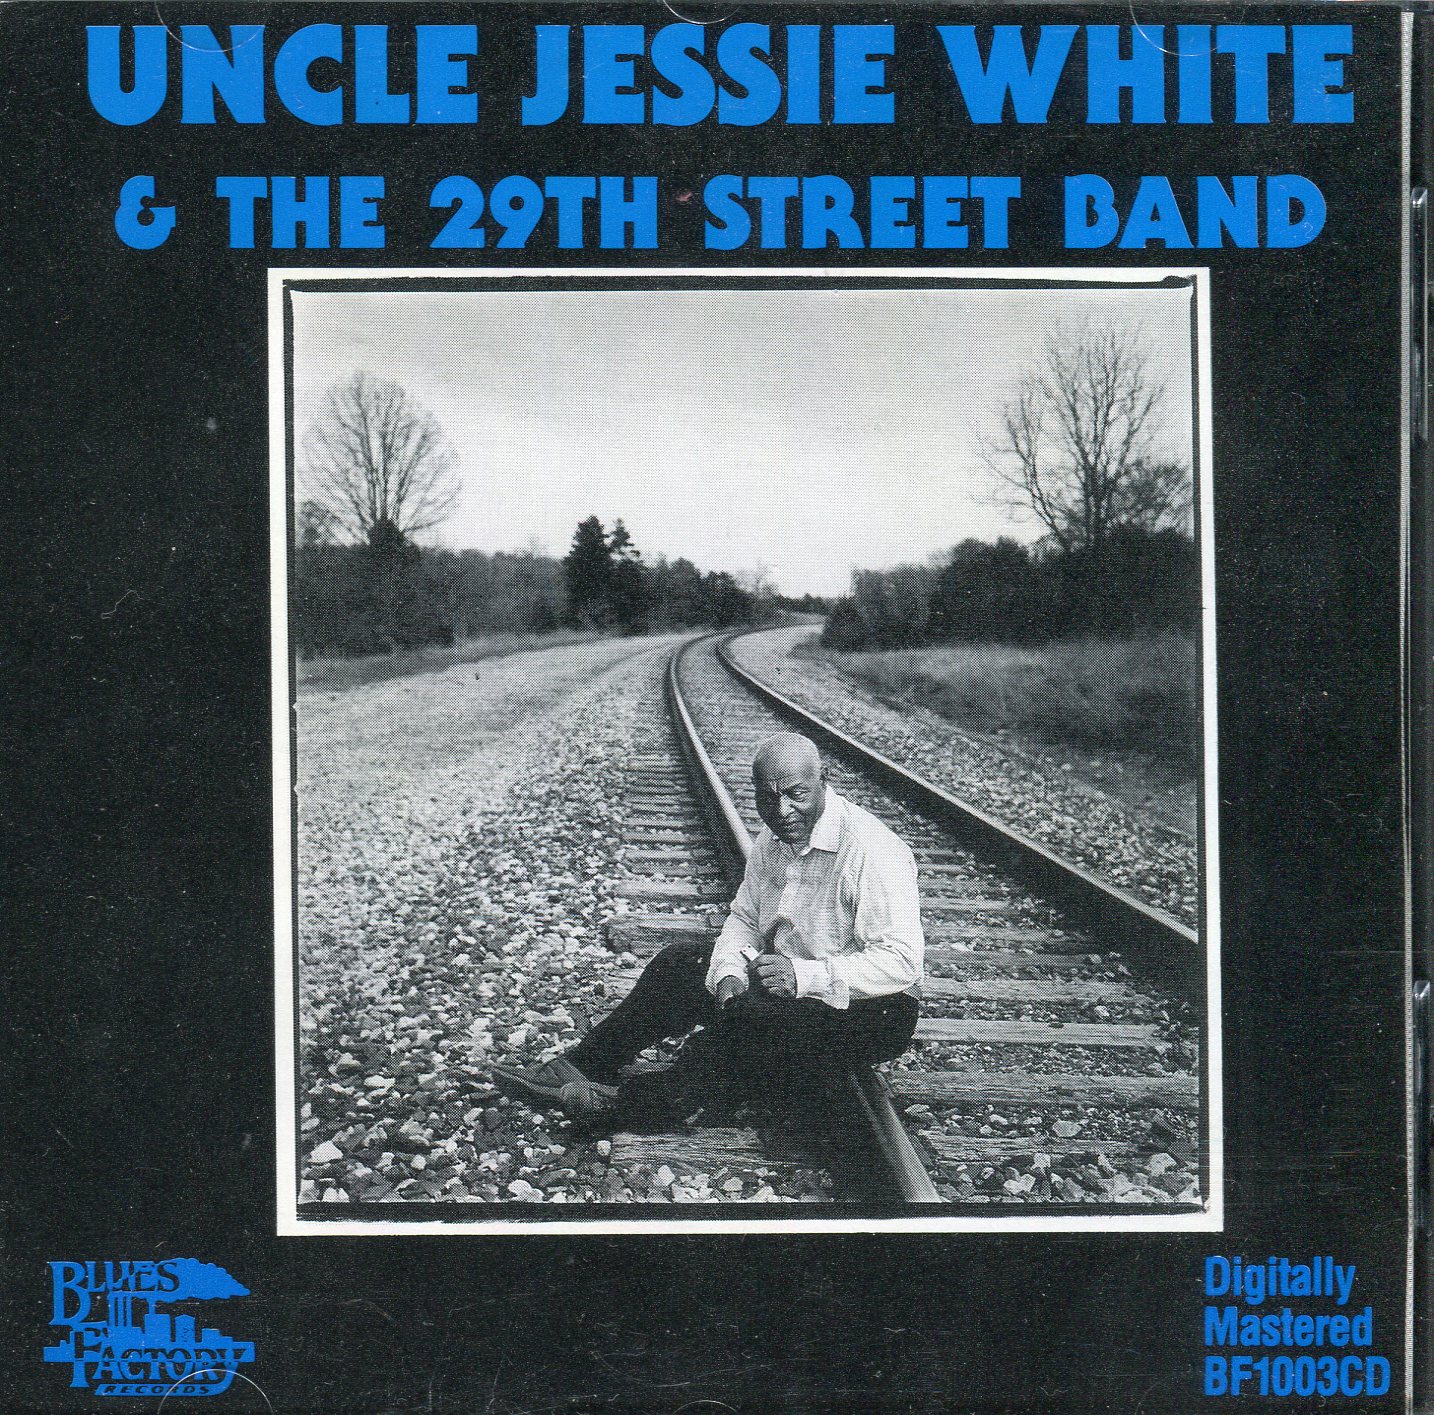 Uncle Jessie White album, front cover.